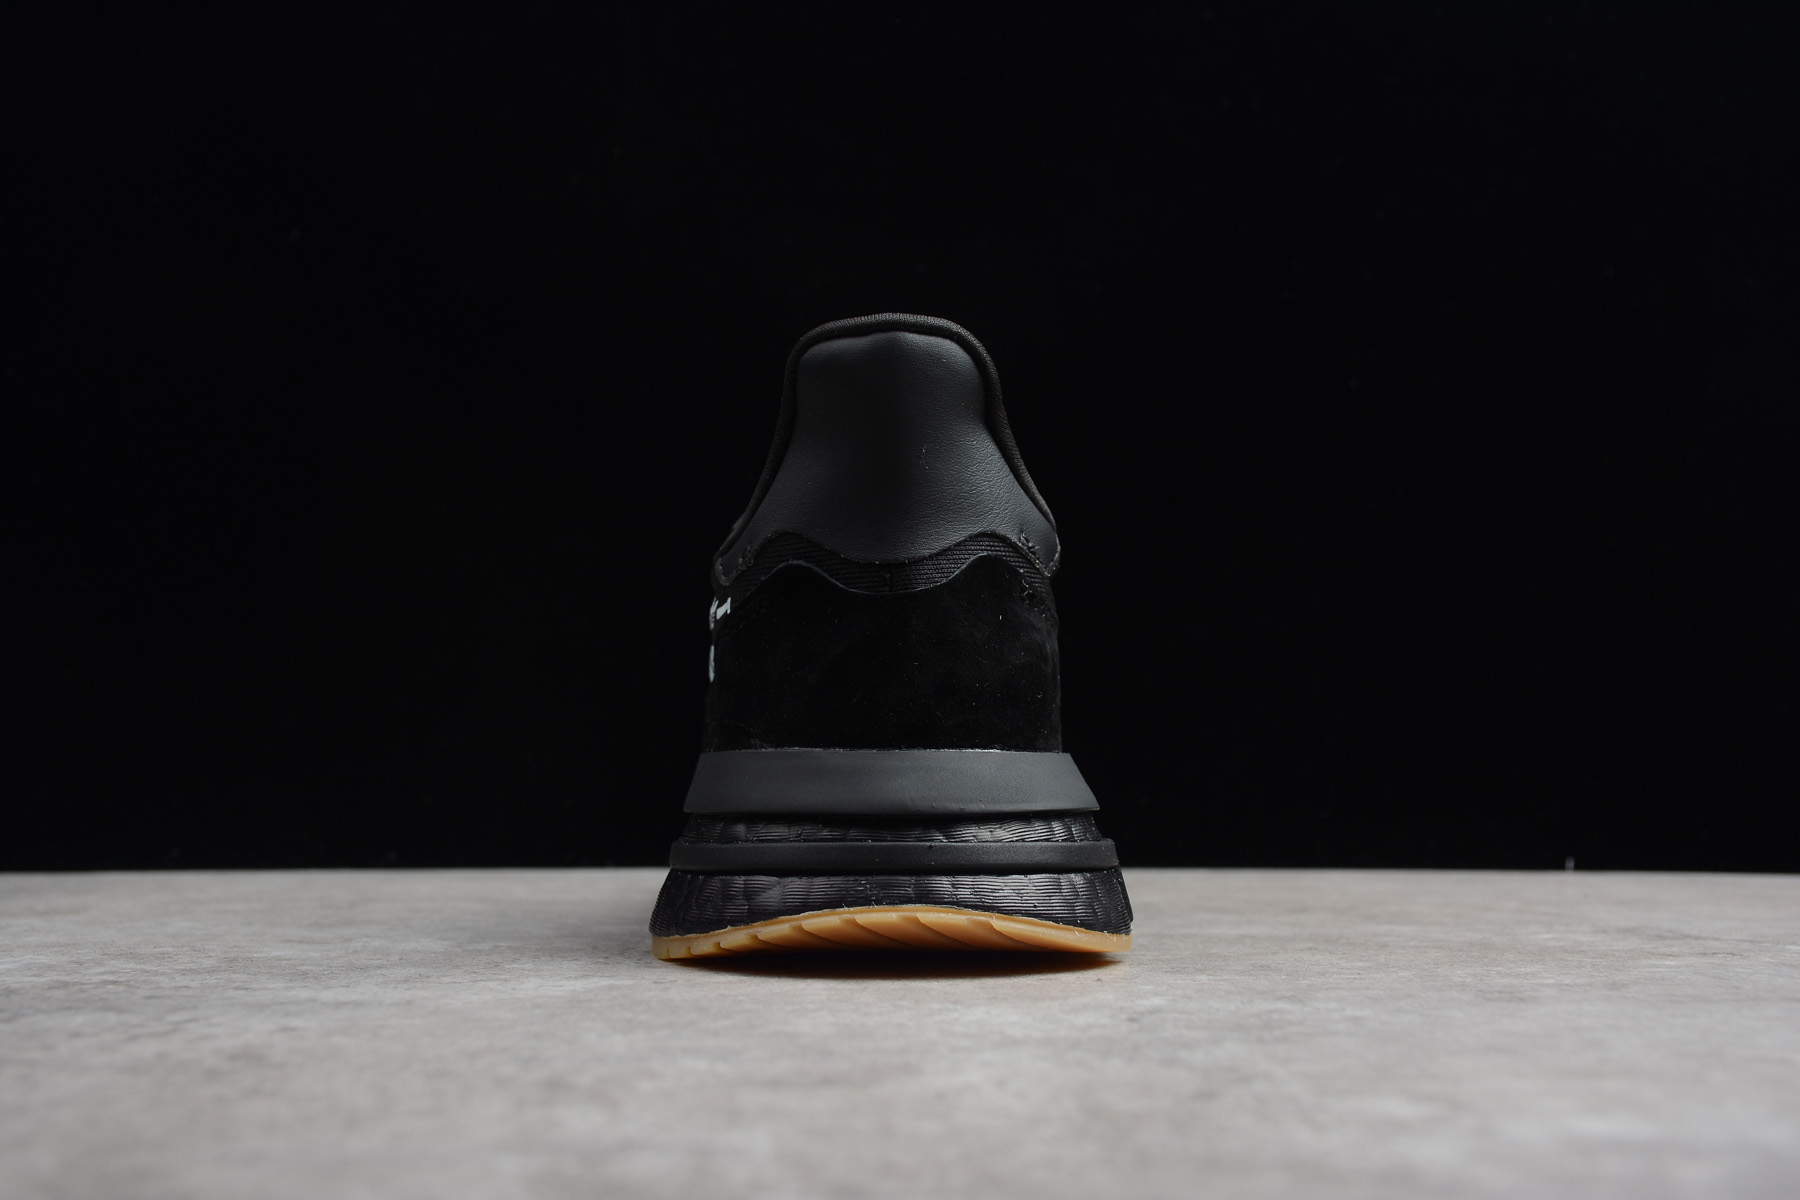 adidas zx 500 rm black gum